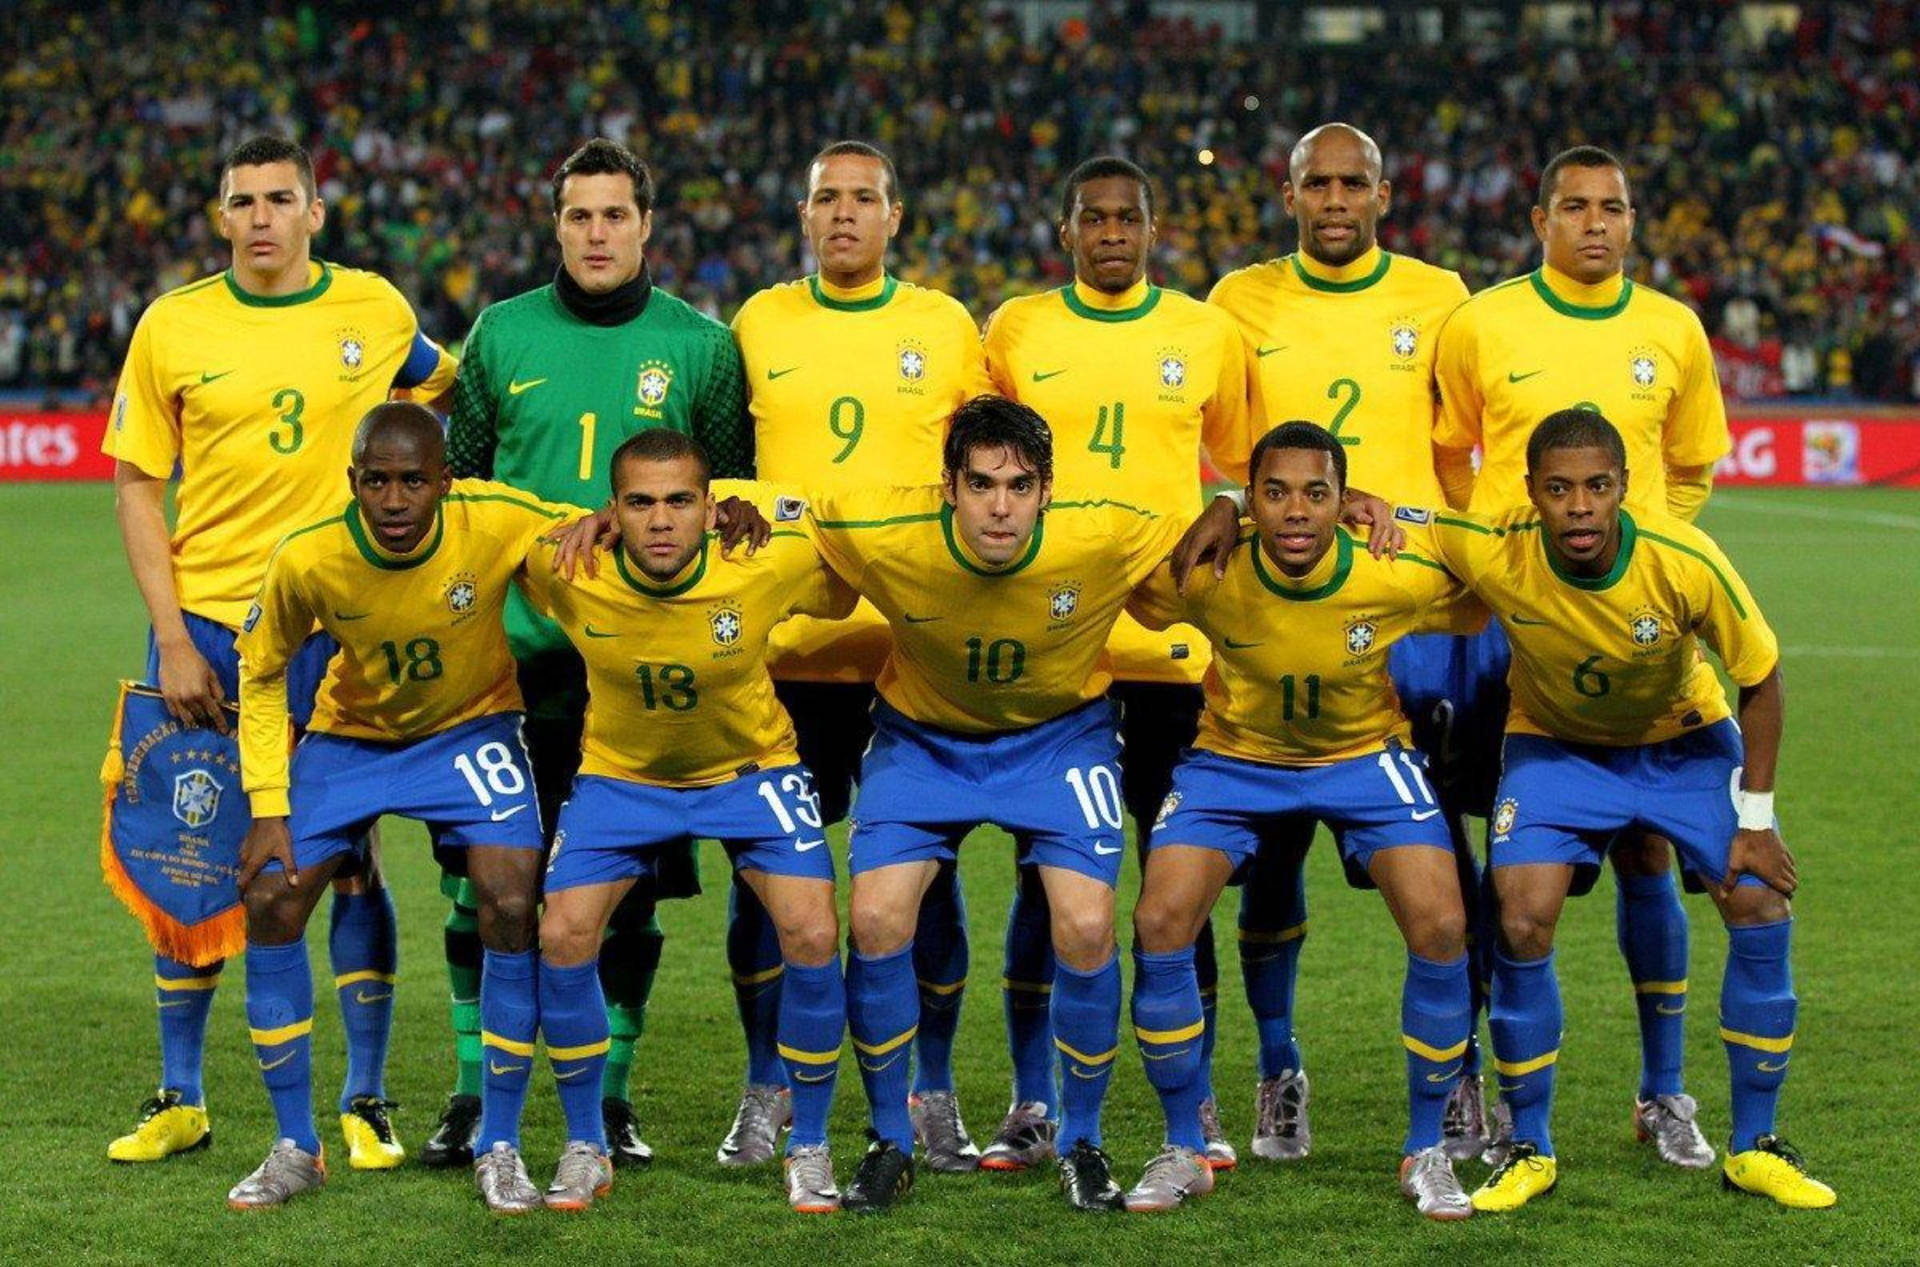 Download Brazil National Football Team Group Photo Wallpaper | Wallpapers .com